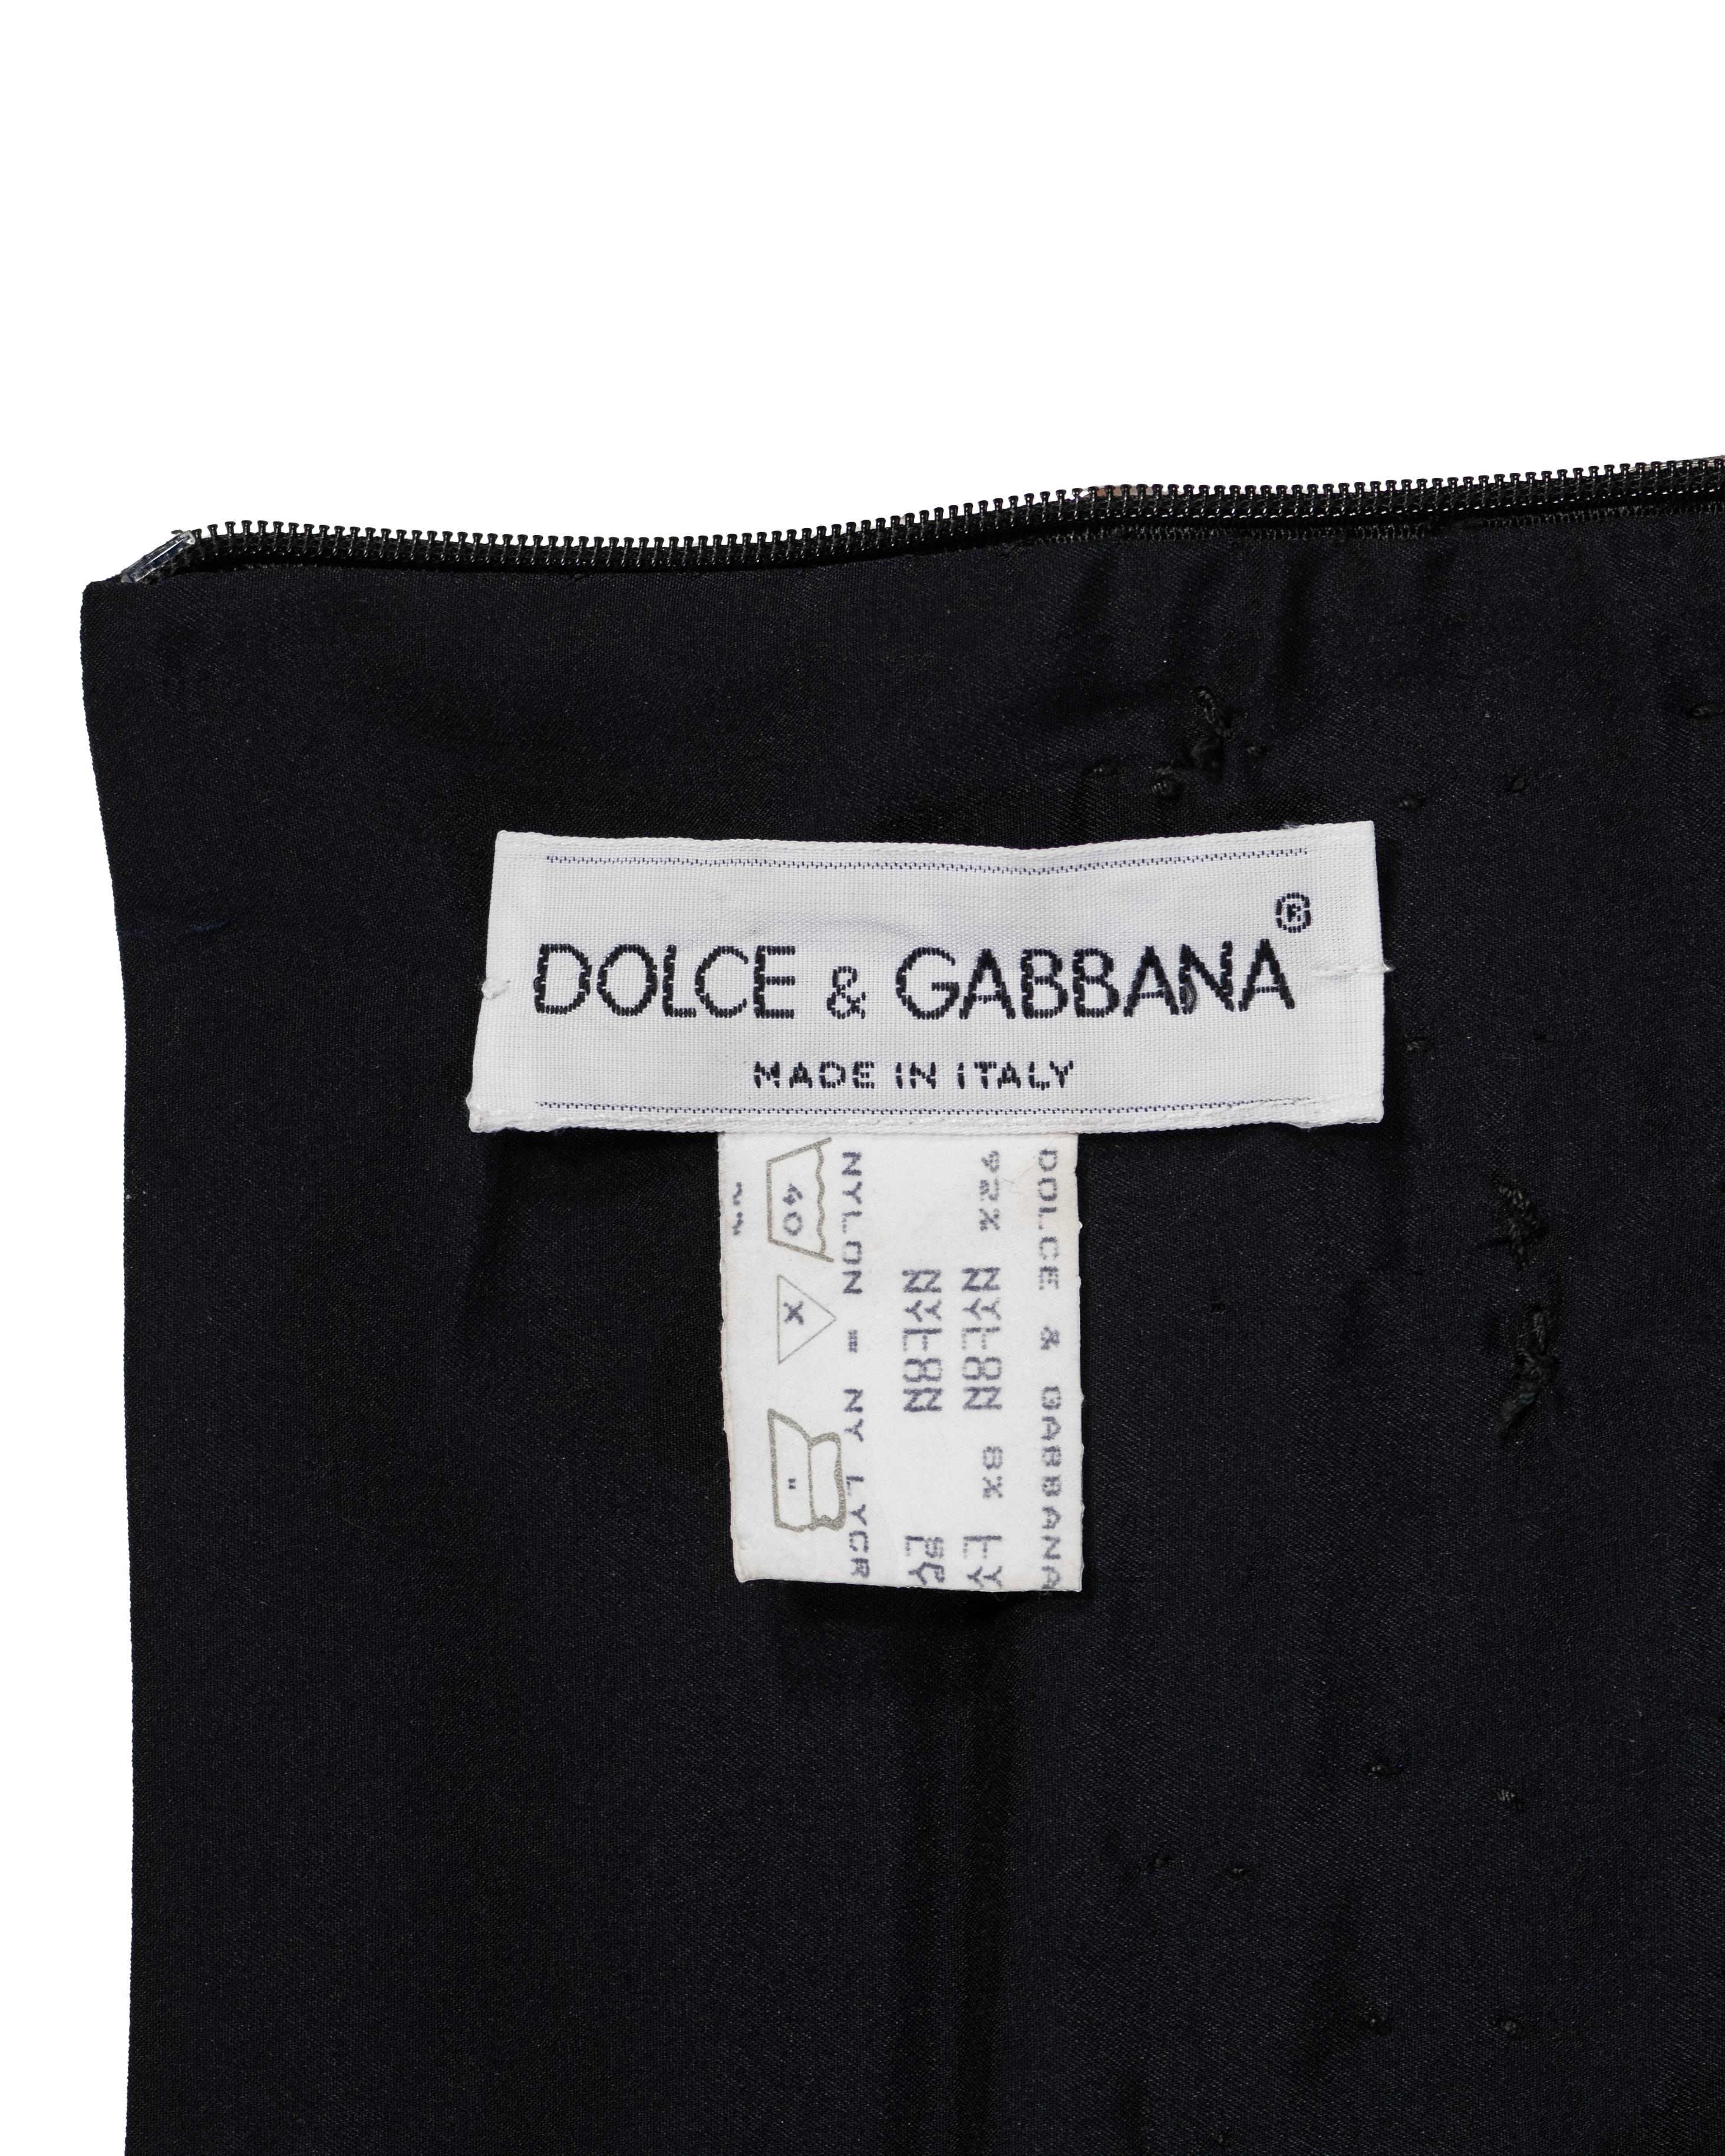 Dolce & Gabbana Black Crystal Adorned Corset, Skirt, Shrug and Gloves, FW 1991 For Sale 7